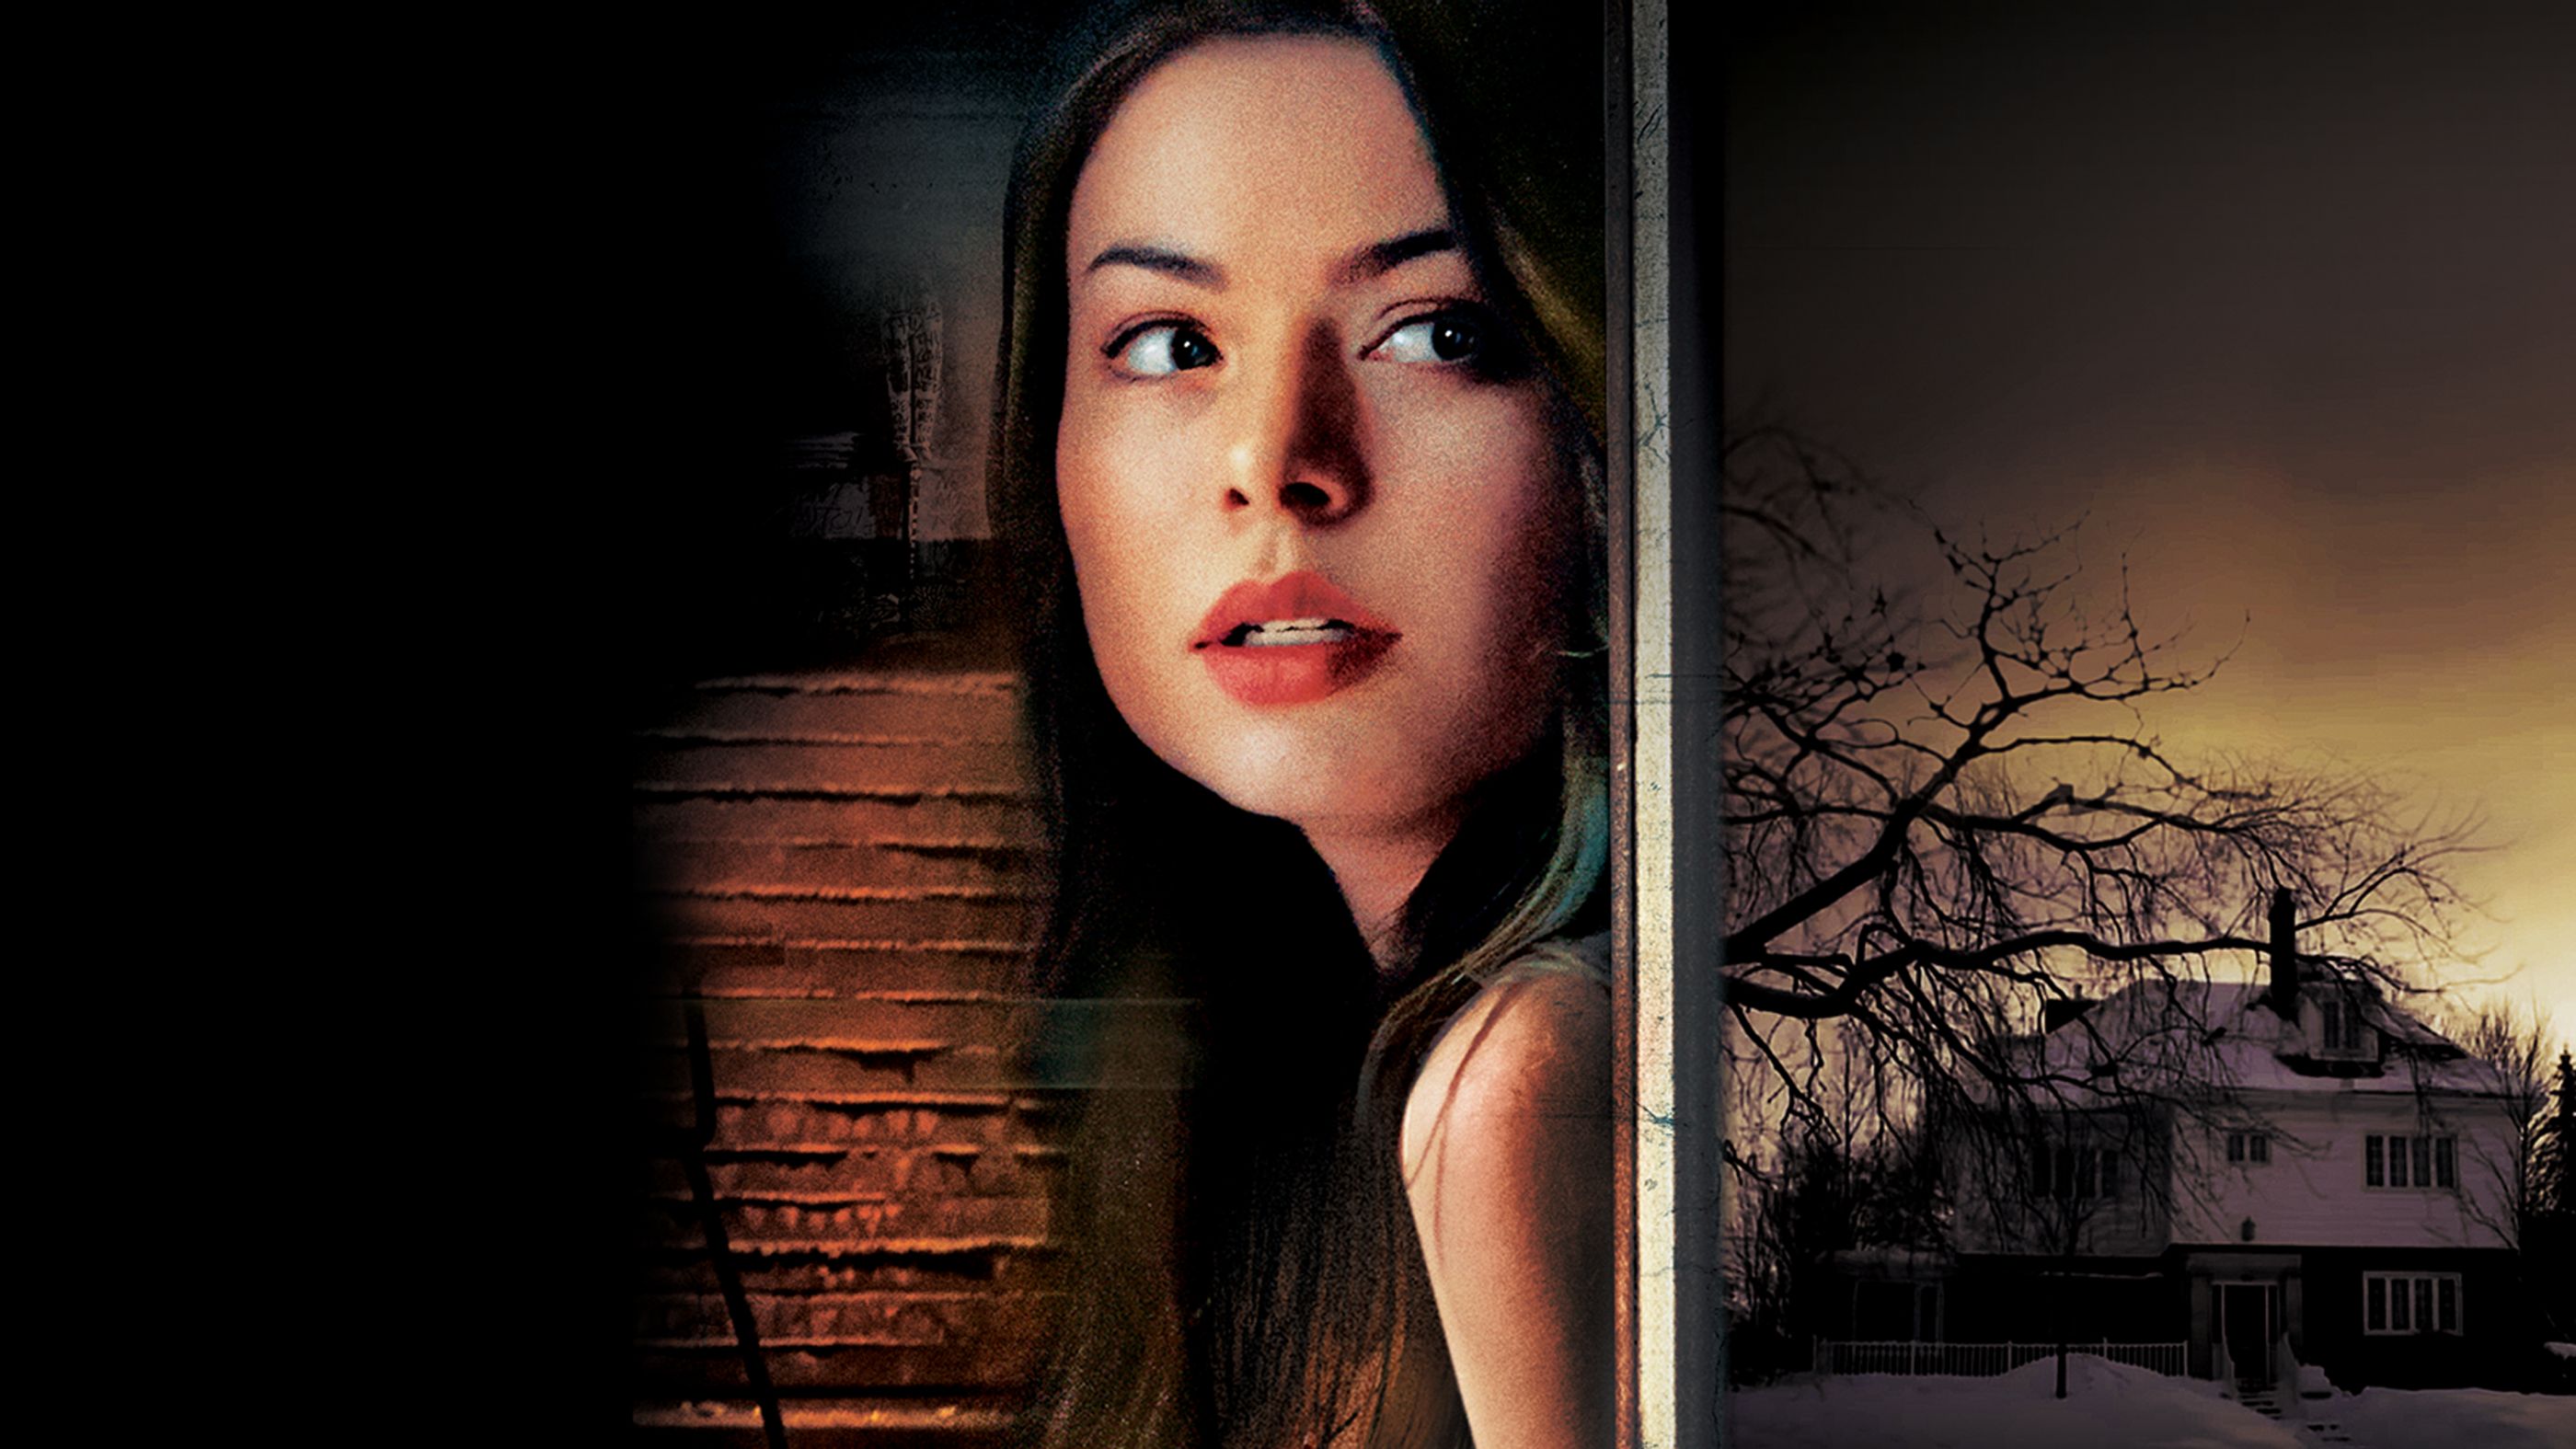 The Intruders Official Trailer #1 (2015) - Miranda Cosgrove Thriller Movie  HD 